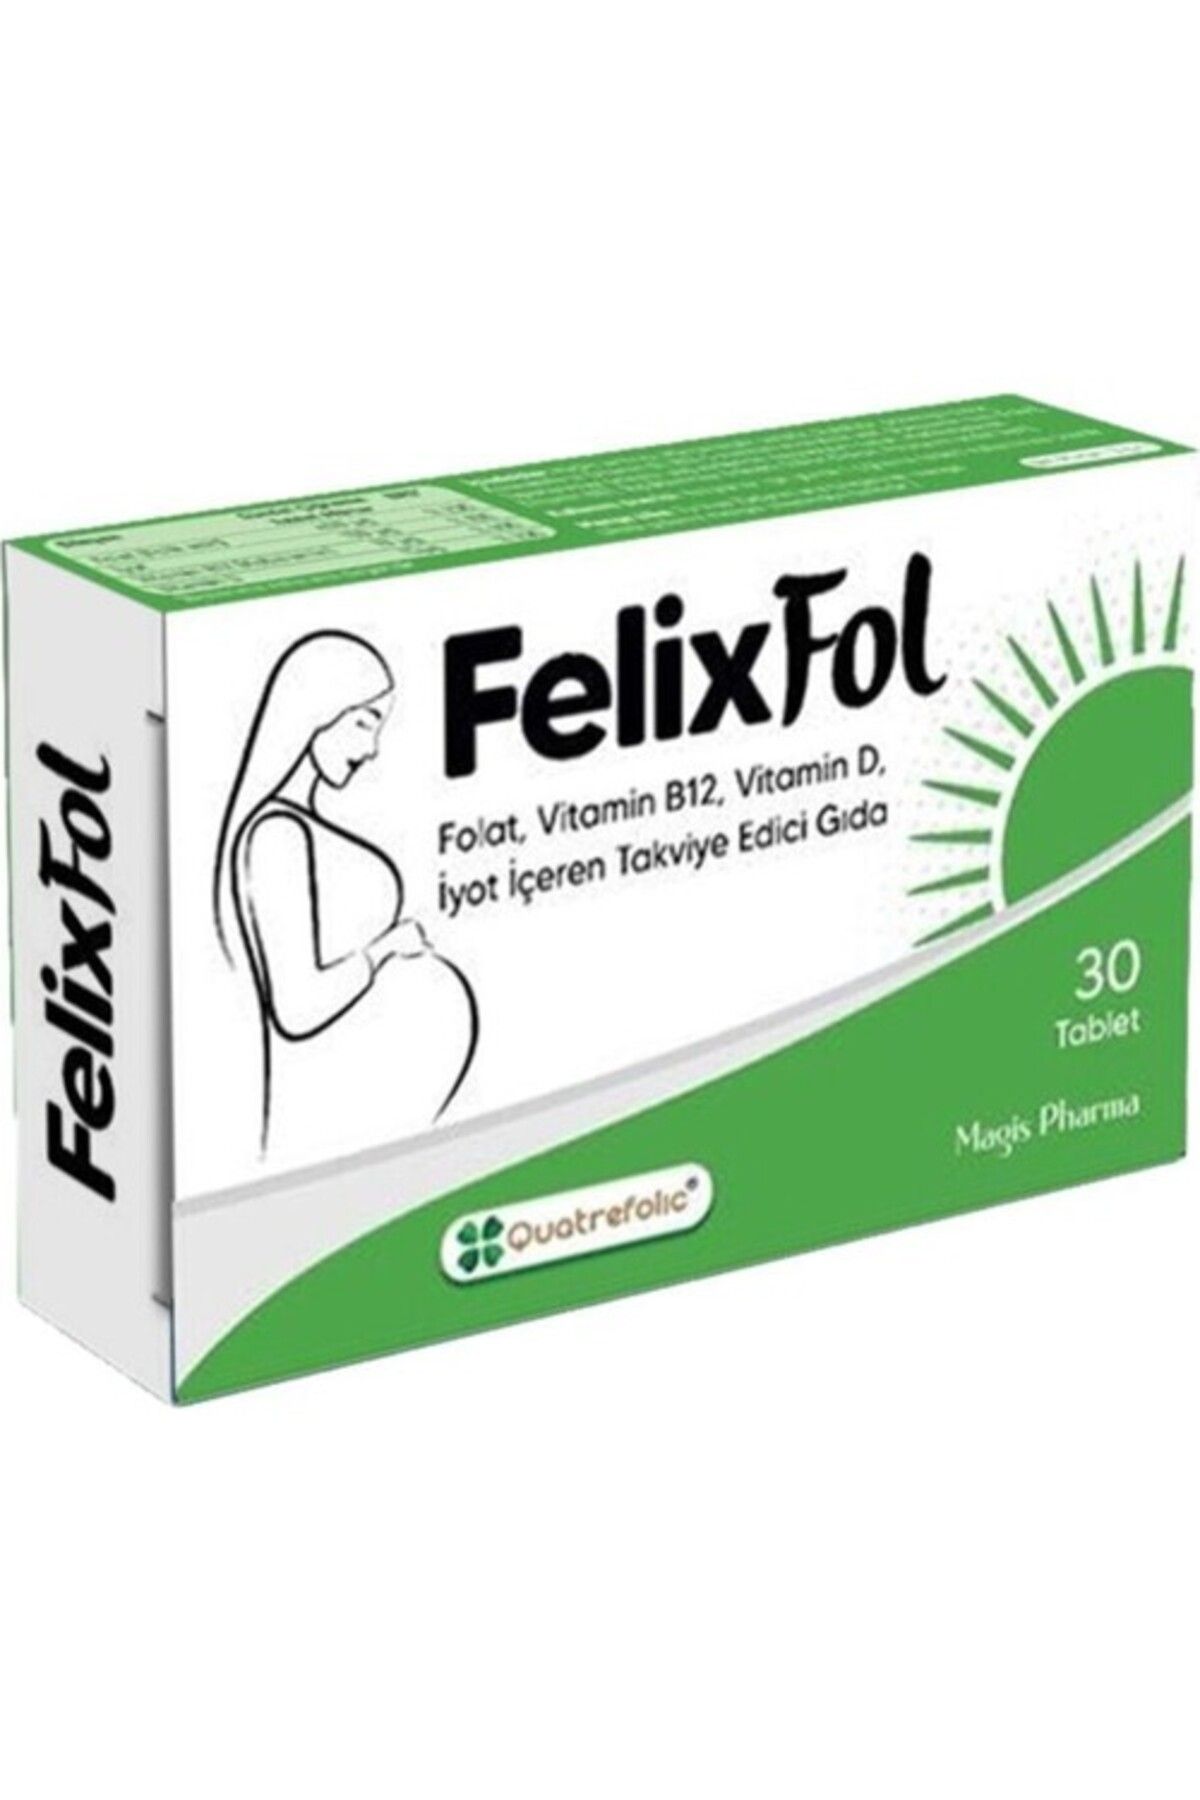 FelixFol Magis Pharma Folat Vitamin B12 30 Tablet